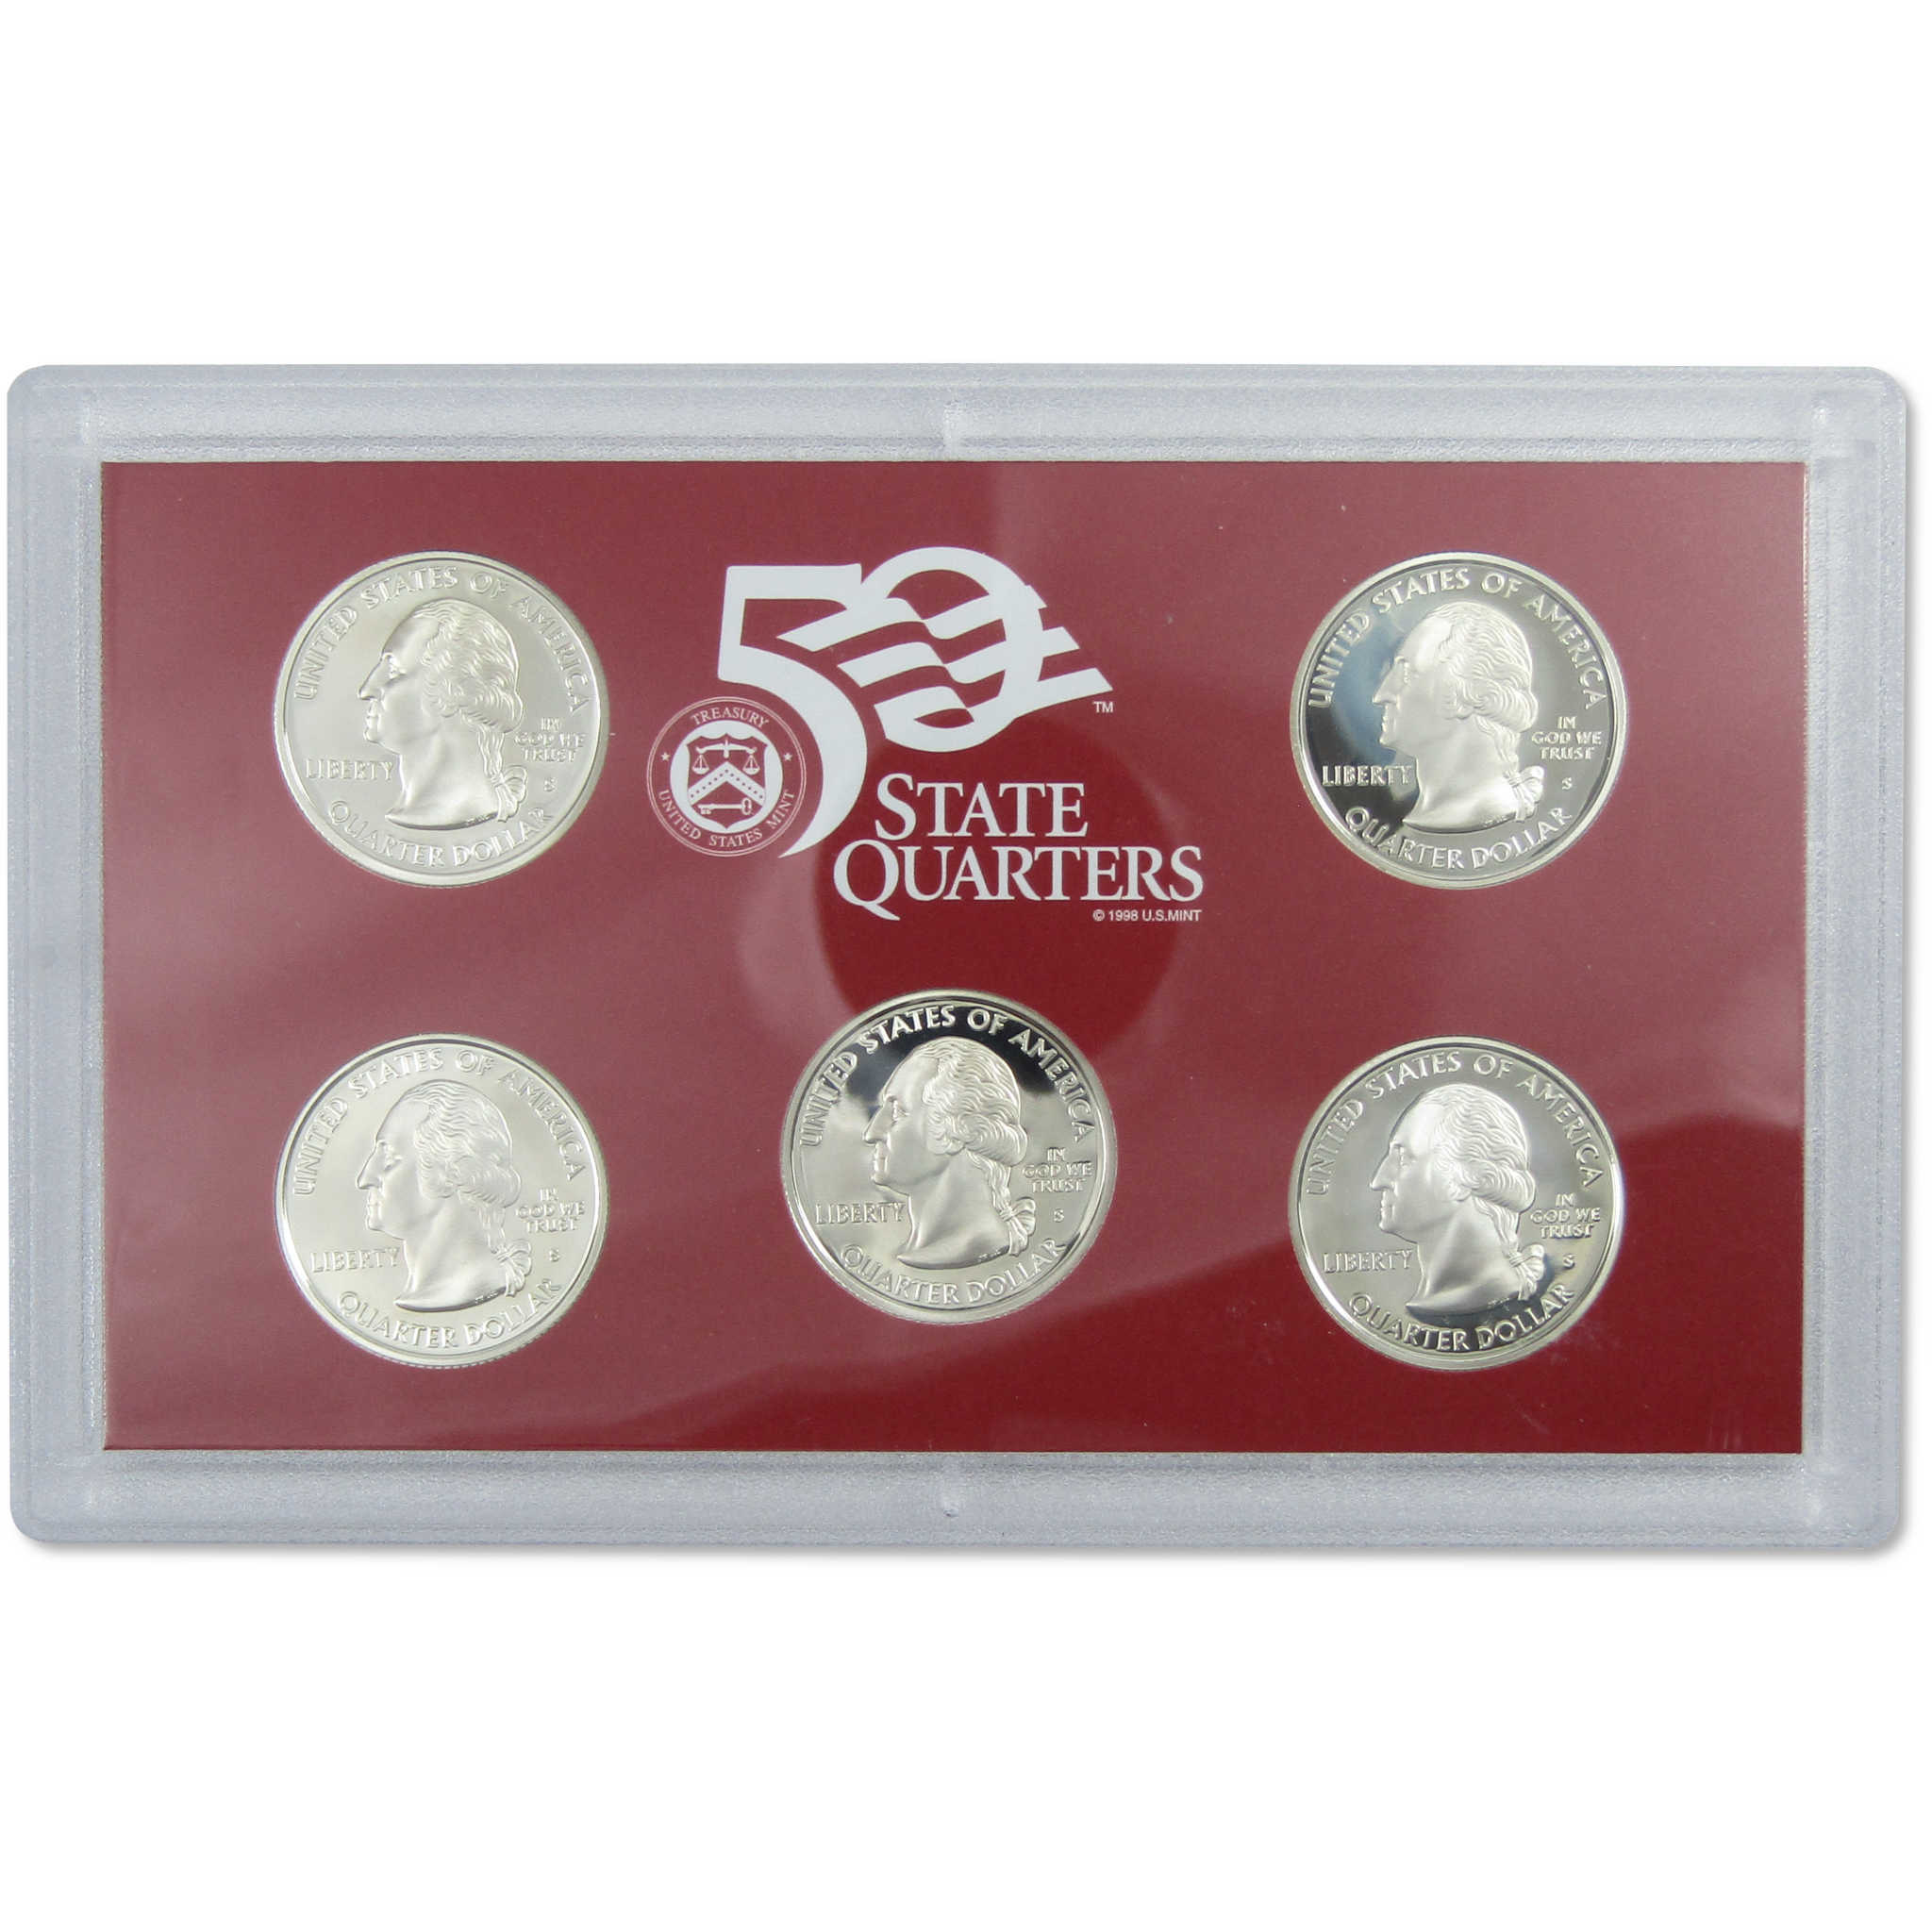 2008 Silver Proof Set U.S. Mint Original Government Packaging OGP COA